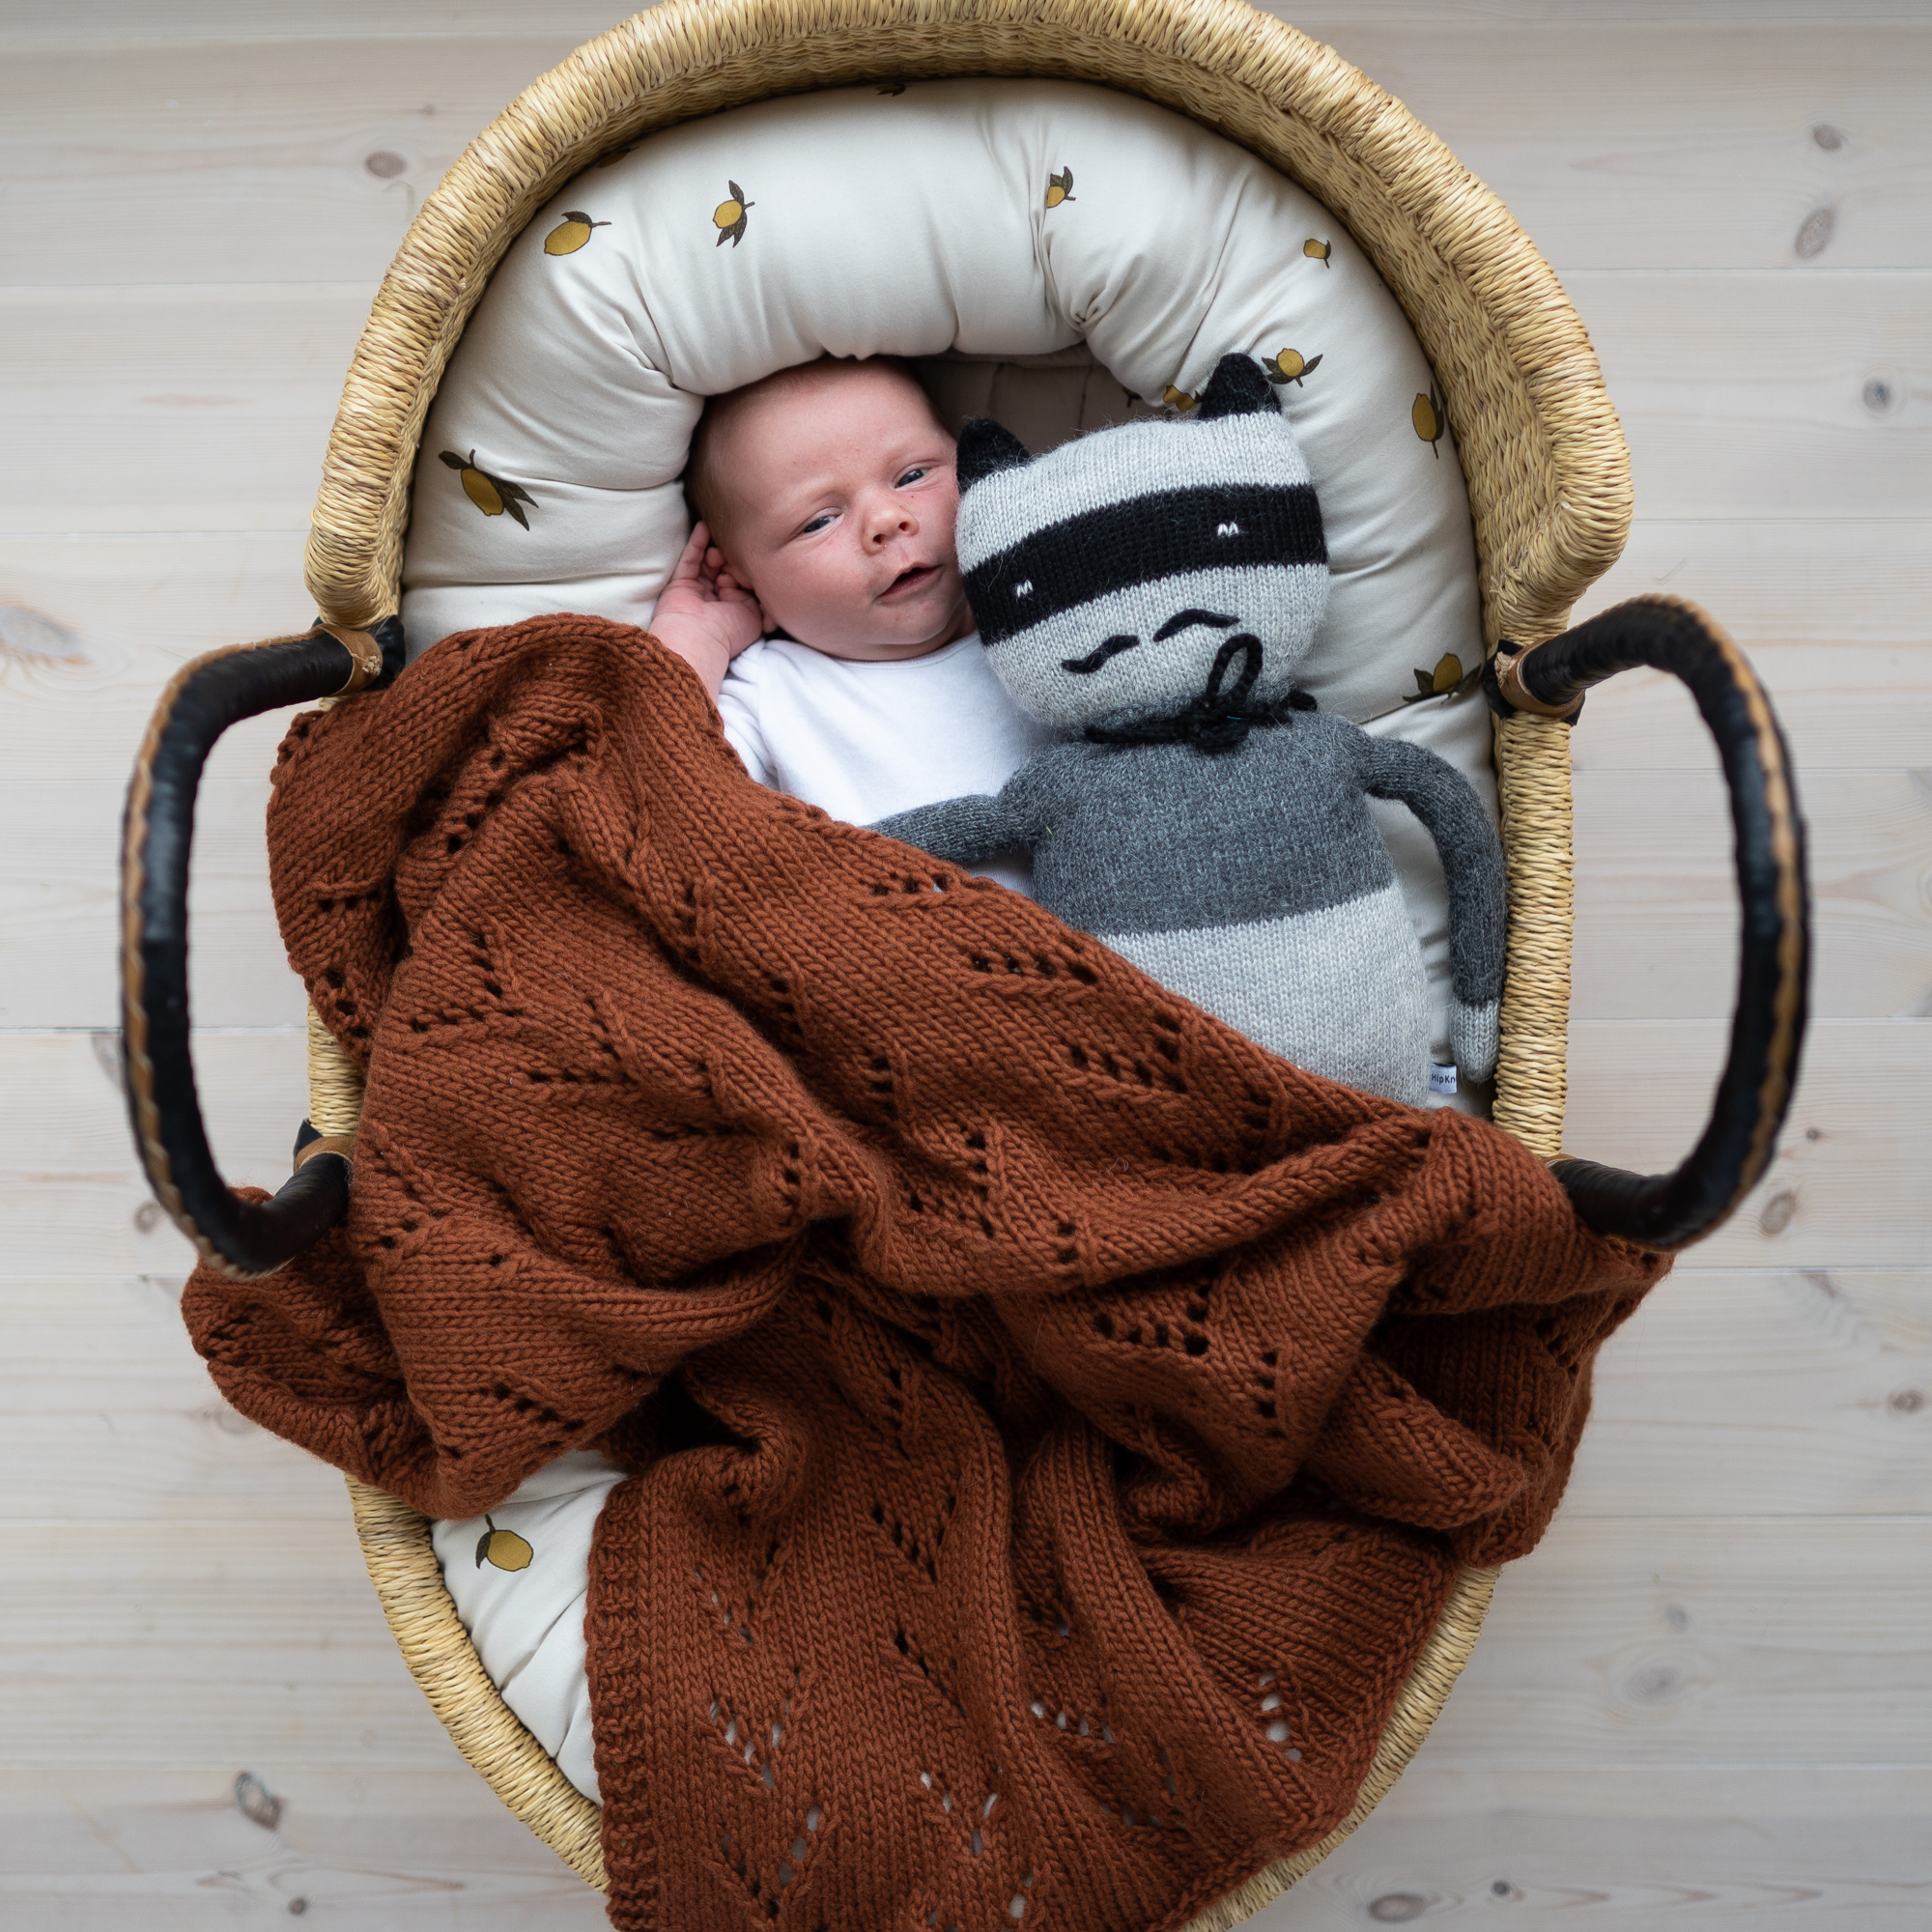  - Bloom blanket | Knitted baby blanket | Knitting kit - by HipKnitShop - 24/11/2020